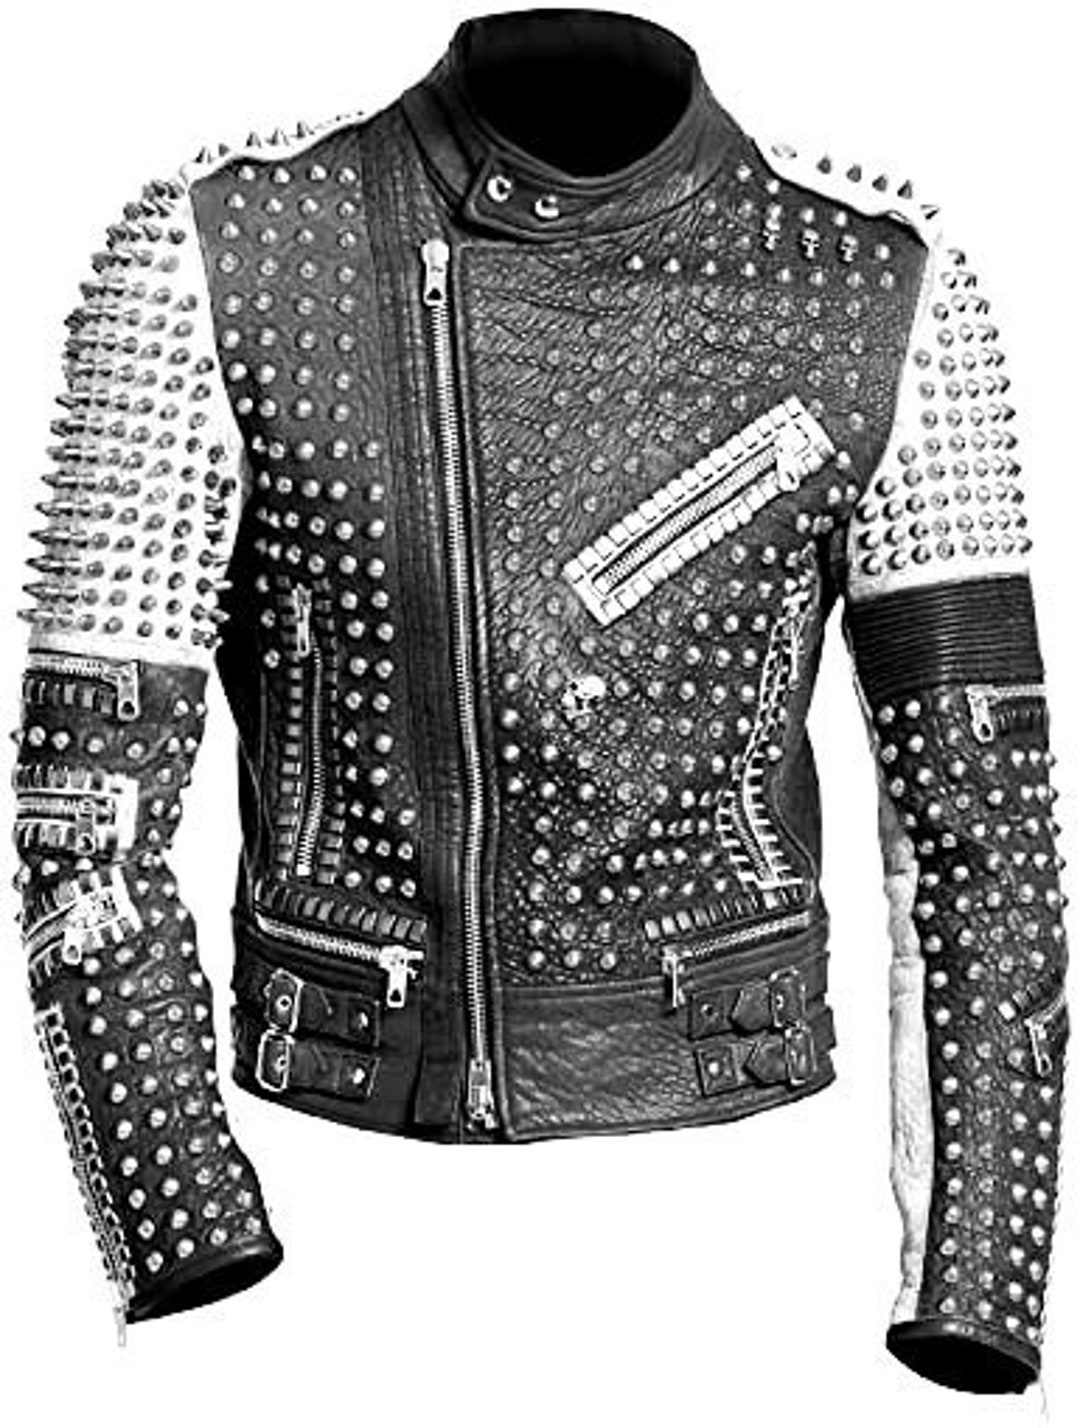 studwork Personalized Men's Patches Studded Jacket, Made to Order Premium Leather Gothic Jacket, Motorbike Punk Silver Studs Fashion Jacket